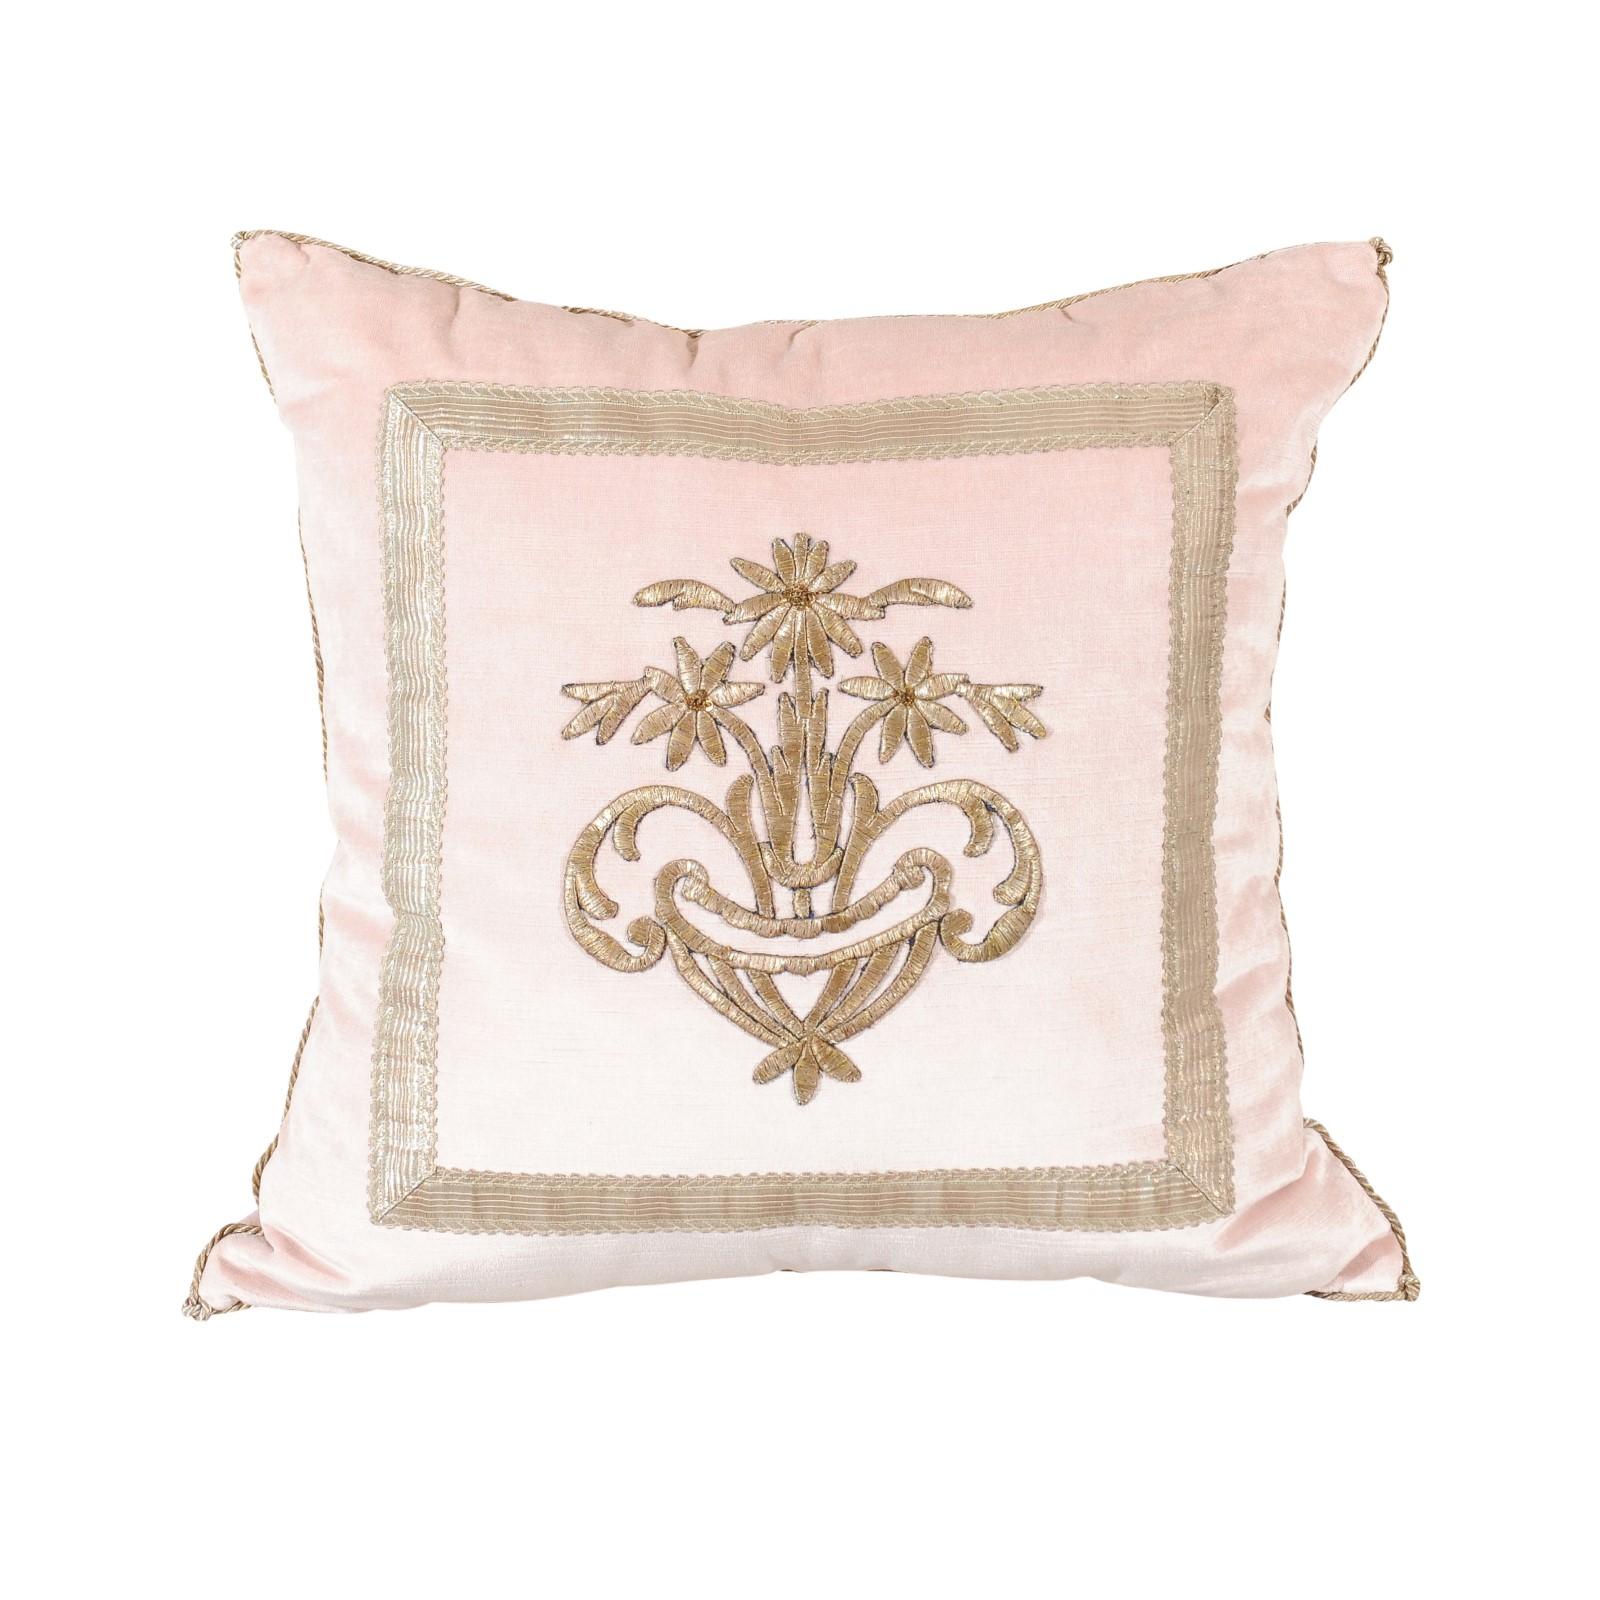 Antique Ottoman Empire Silver Metallic Embroidery on Blush Pink Velvet Pillow